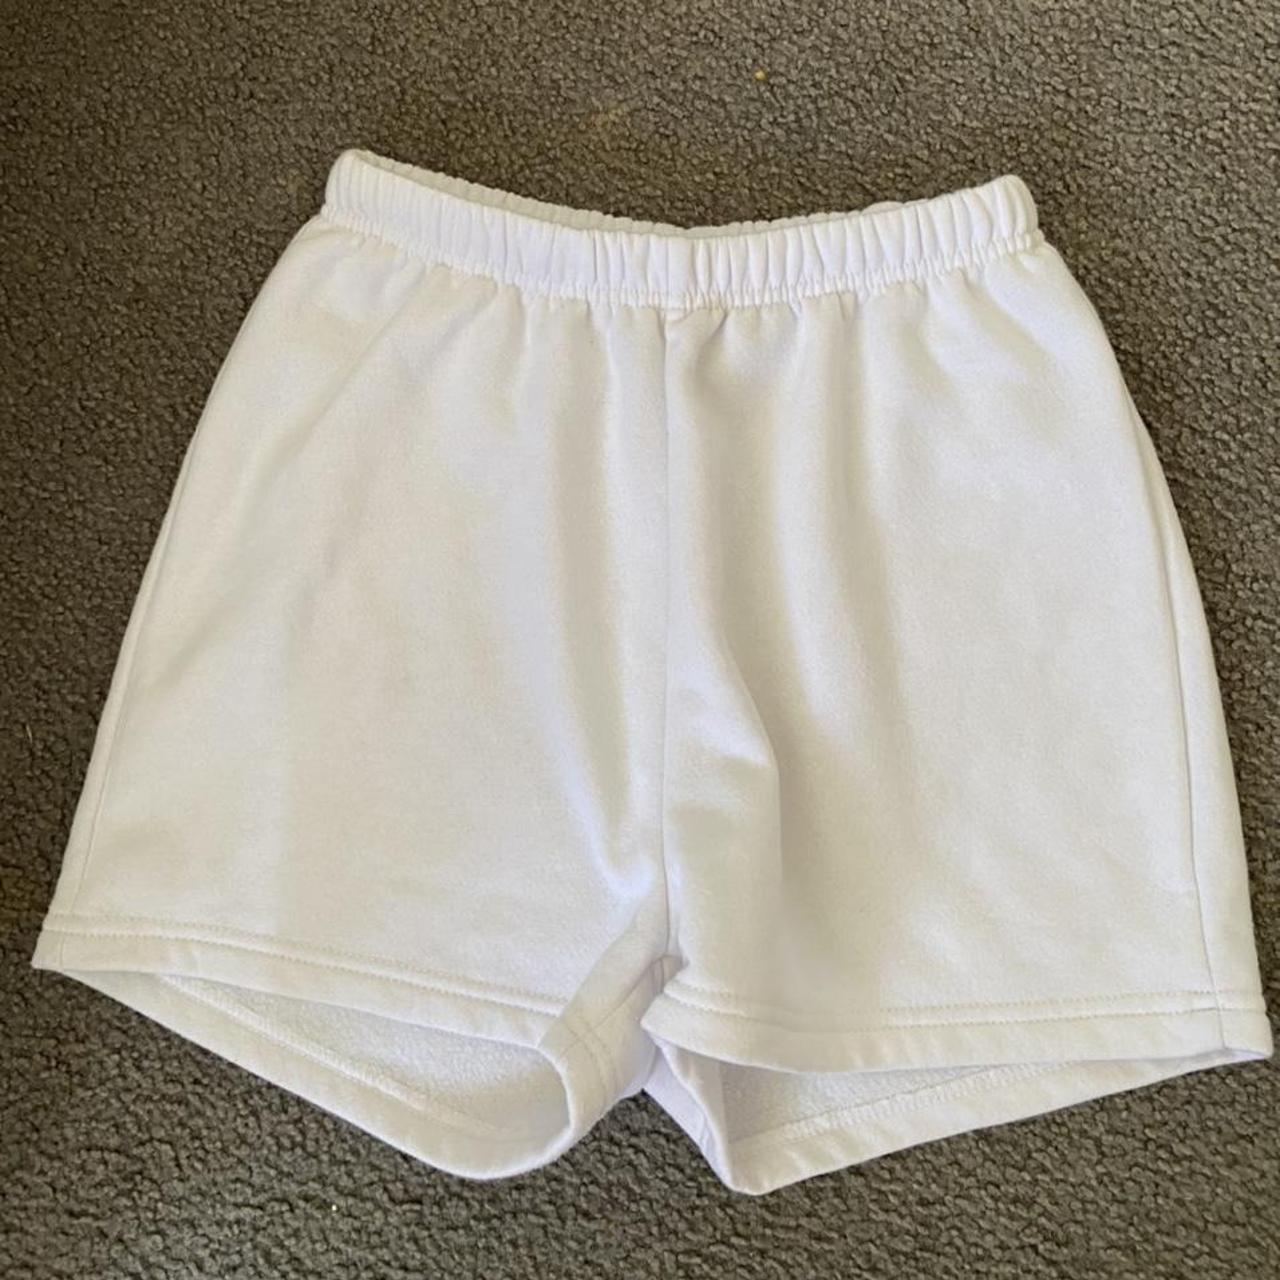 FACTORIE comfy white shorts 🤍 - super comfy but... - Depop